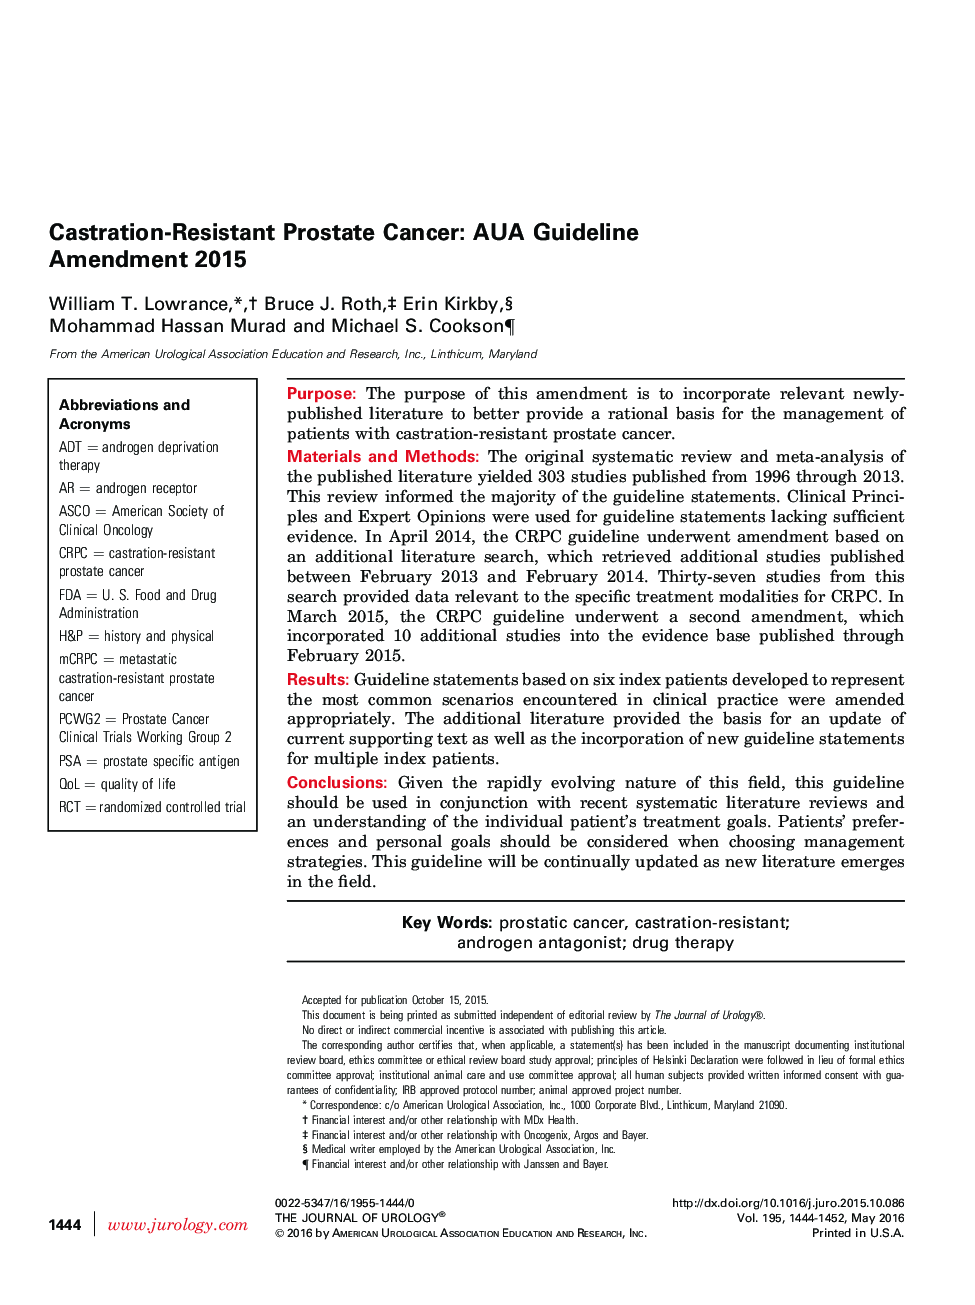 Castration-Resistant Prostate Cancer: AUA Guideline Amendment 2015 